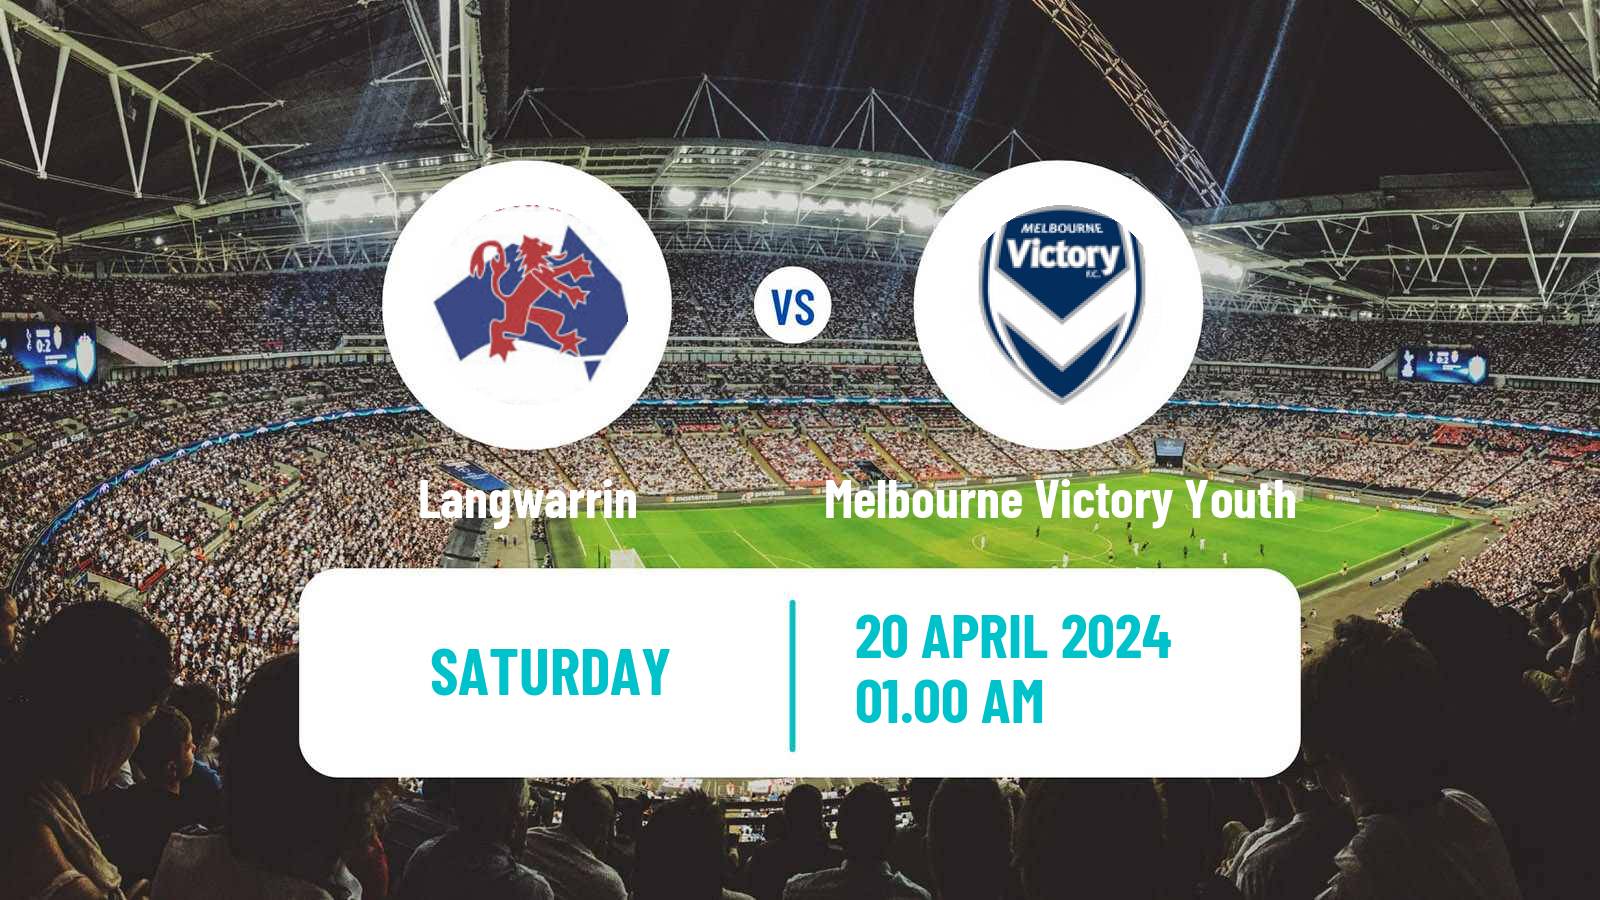 Soccer Australian Victoria Premier League Langwarrin - Melbourne Victory Youth